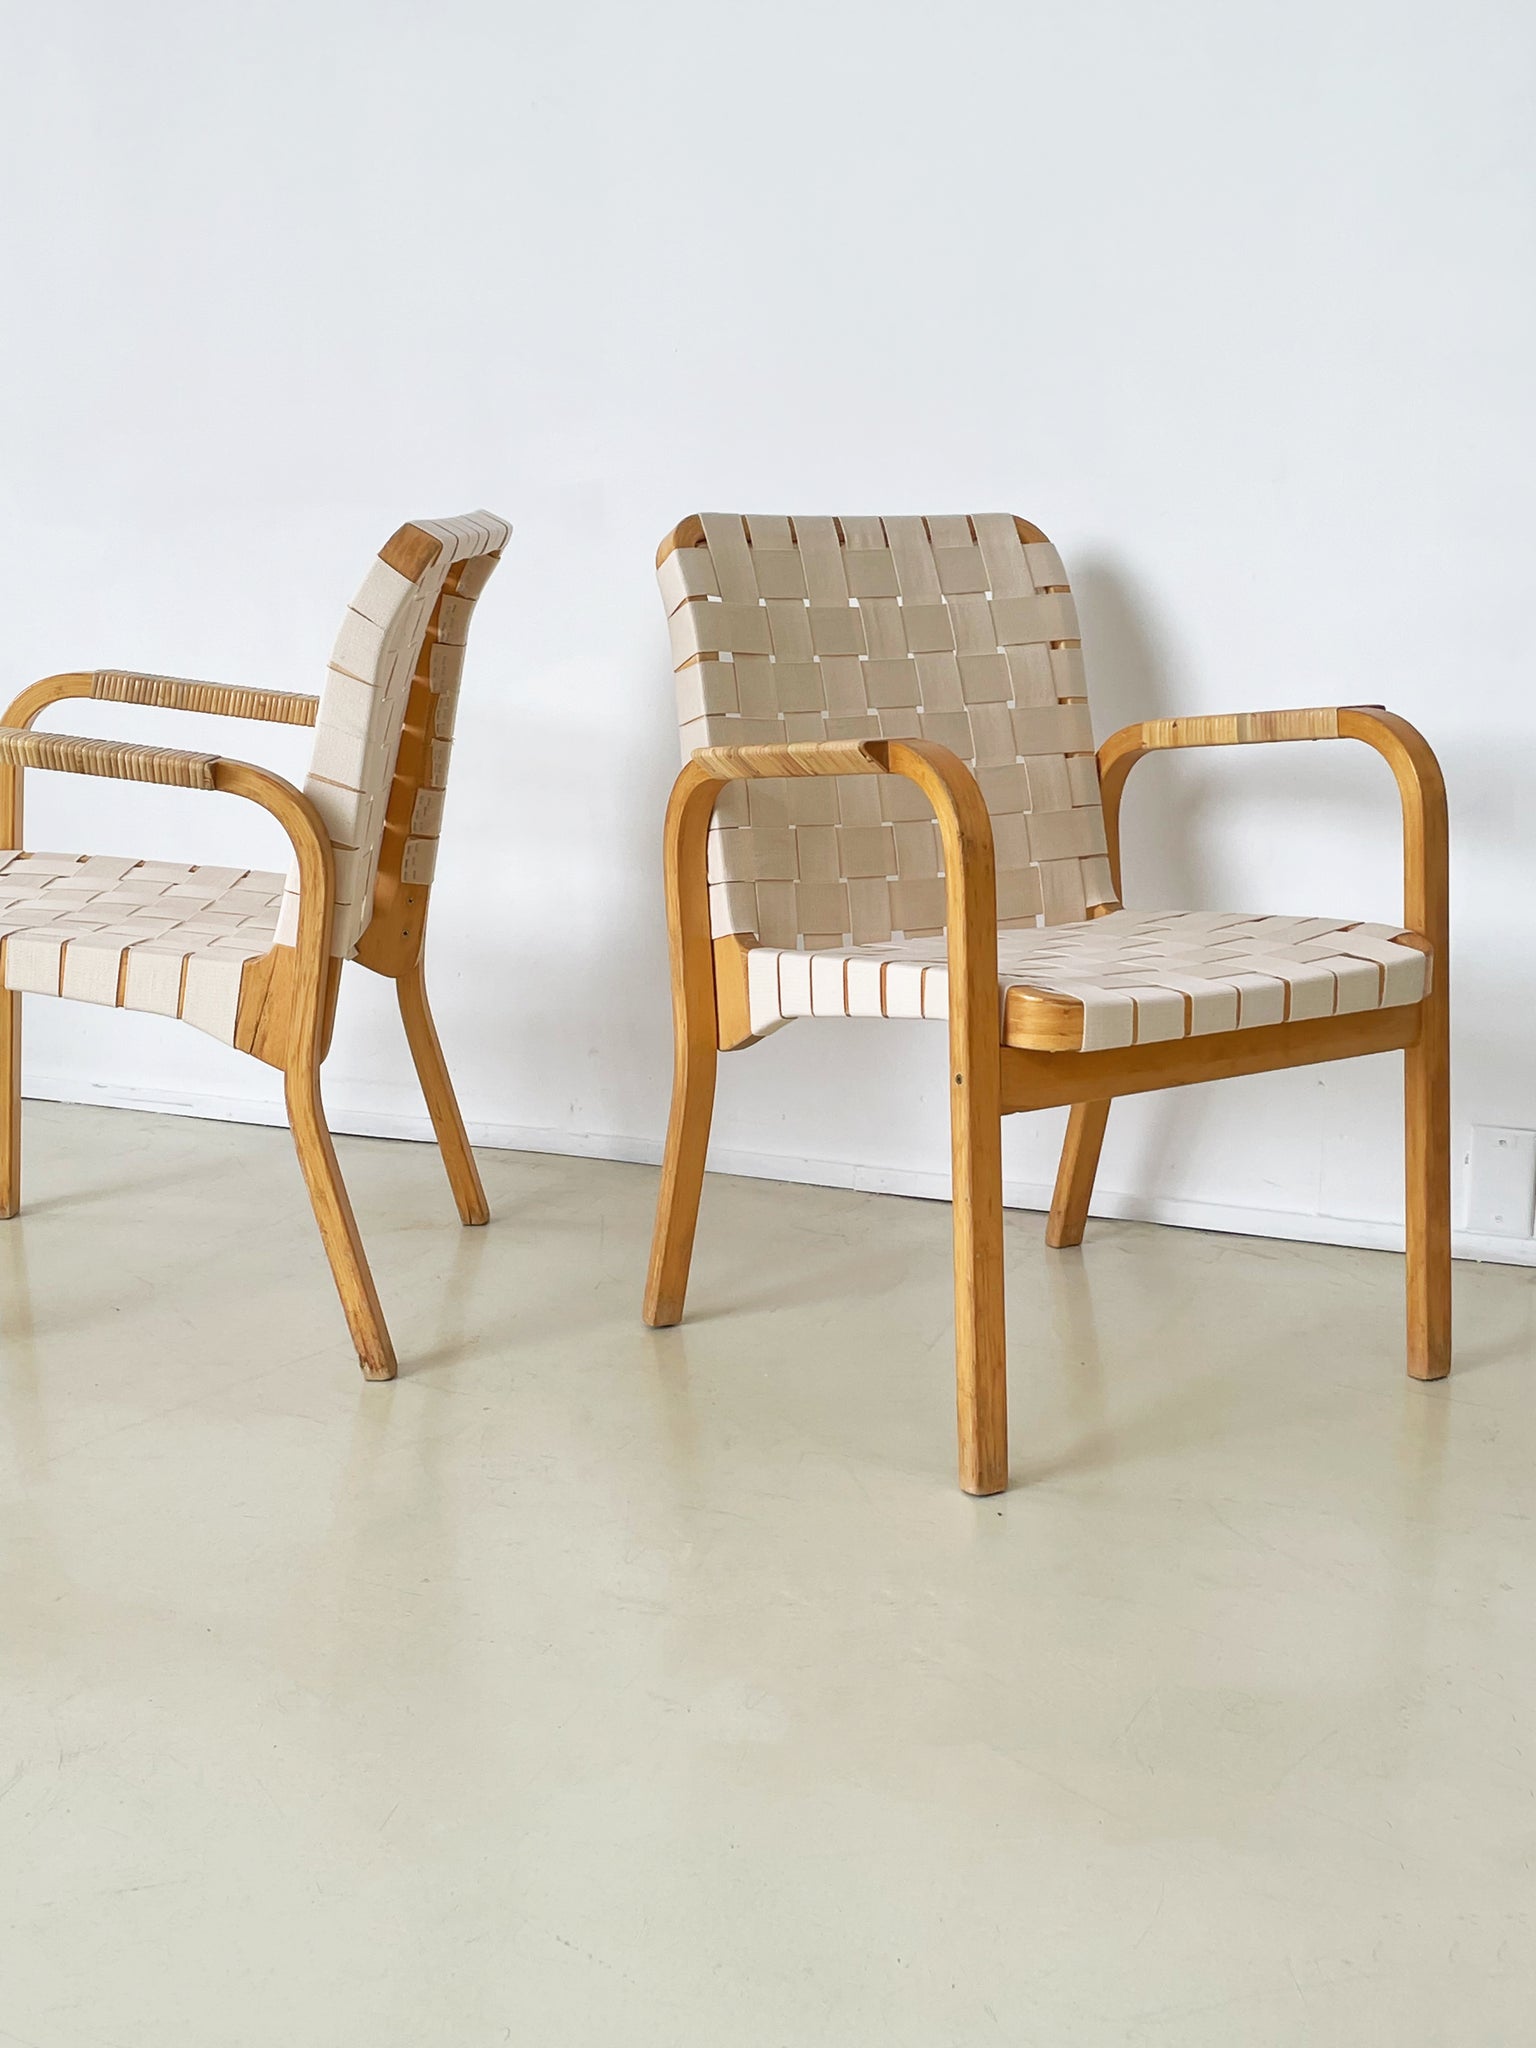 1960s Alvar Aalto Chair 45 With Rattan Arms